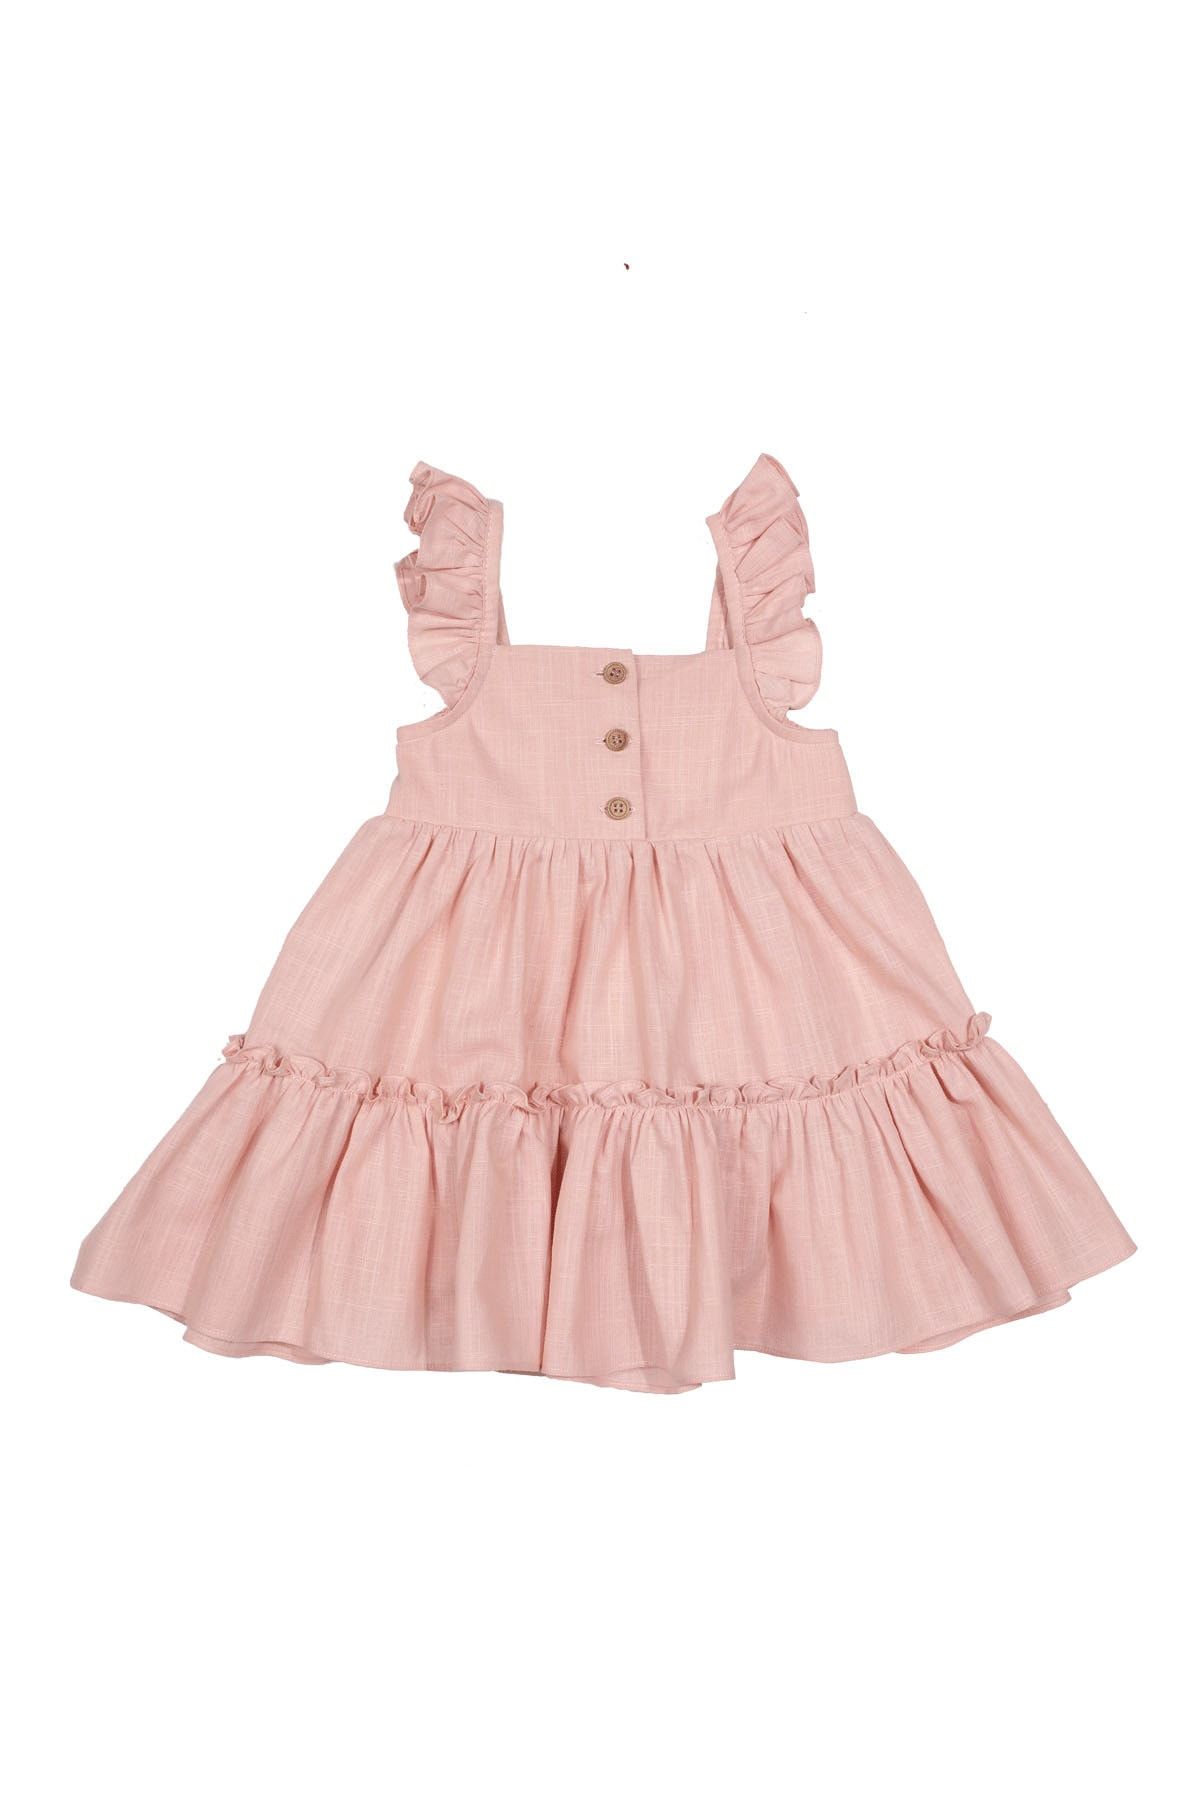 Le Petit Mico Jacqueline / %100 Pamuk Fırfırlı Pembe Kız Çocuk Elbise